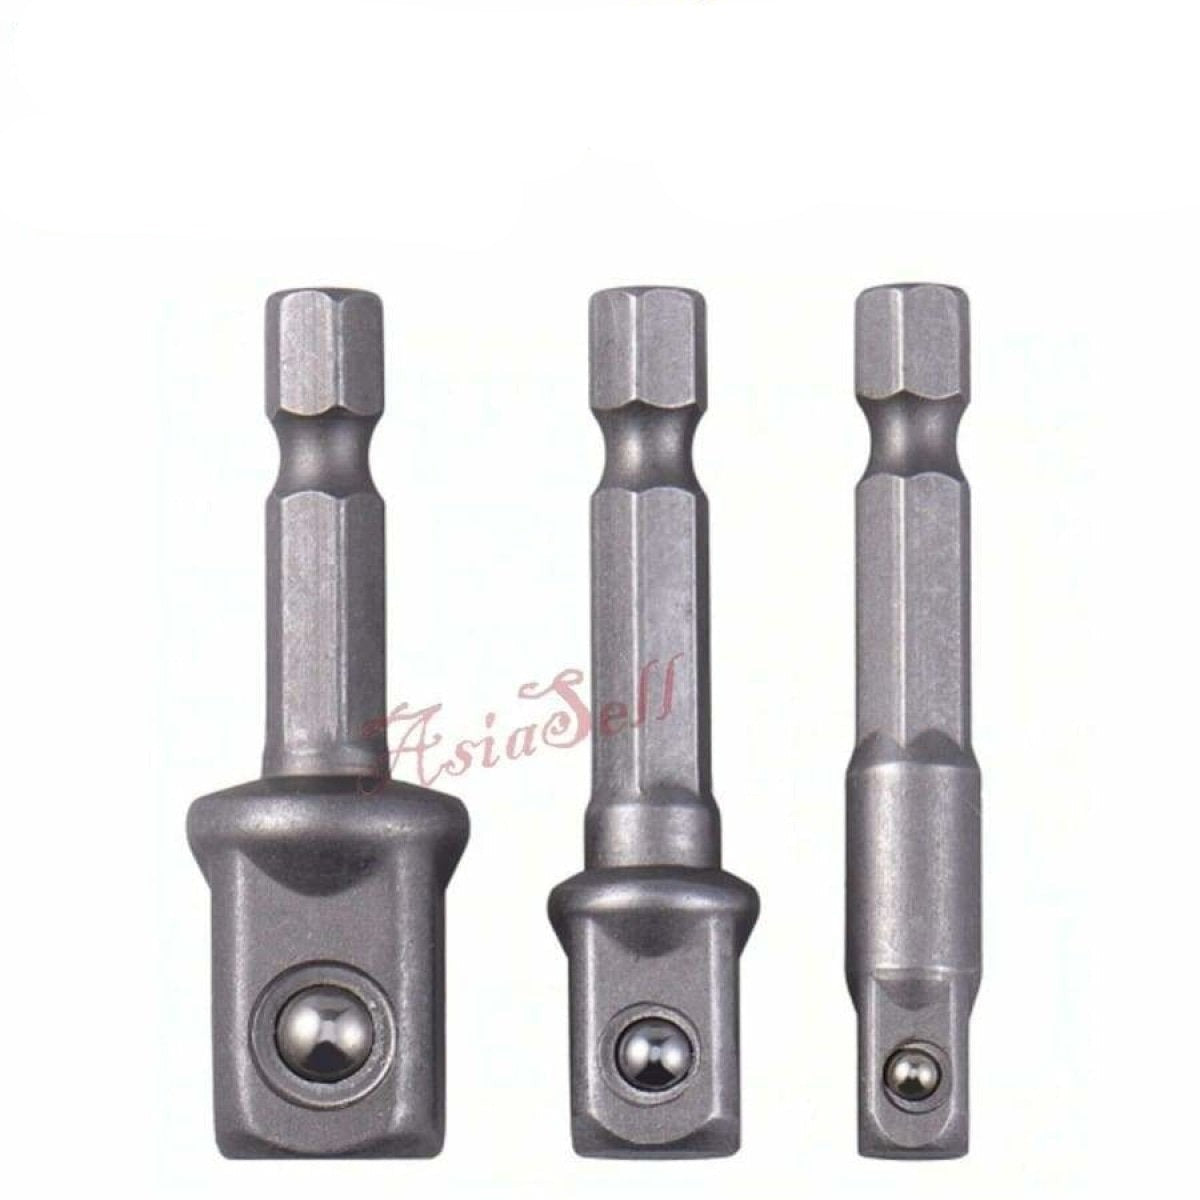 3pcs Set Chrome Vanadium Steel Socket Adapter Hex Shank Extension 1/4" 3/8" 1/2" | Asia Sell